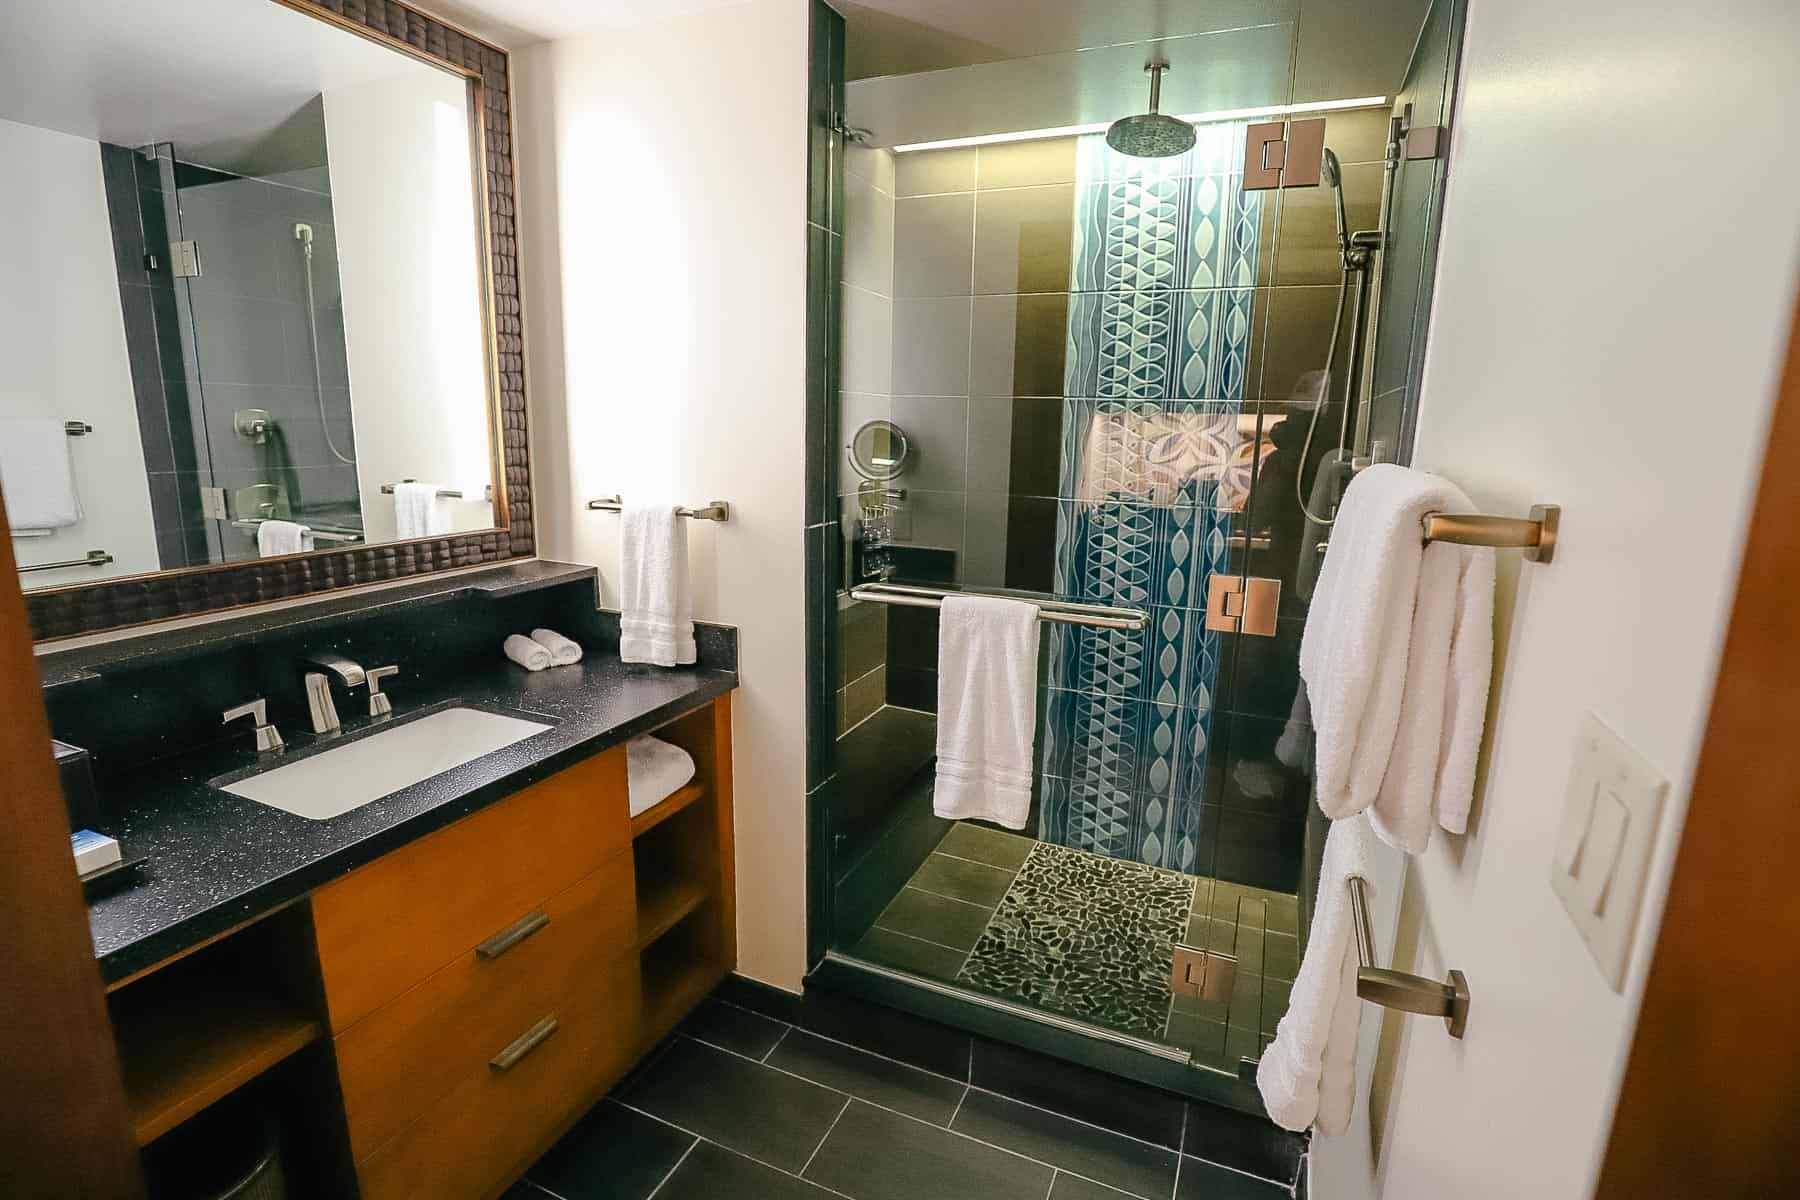 split bath with vanity and walk in shower 